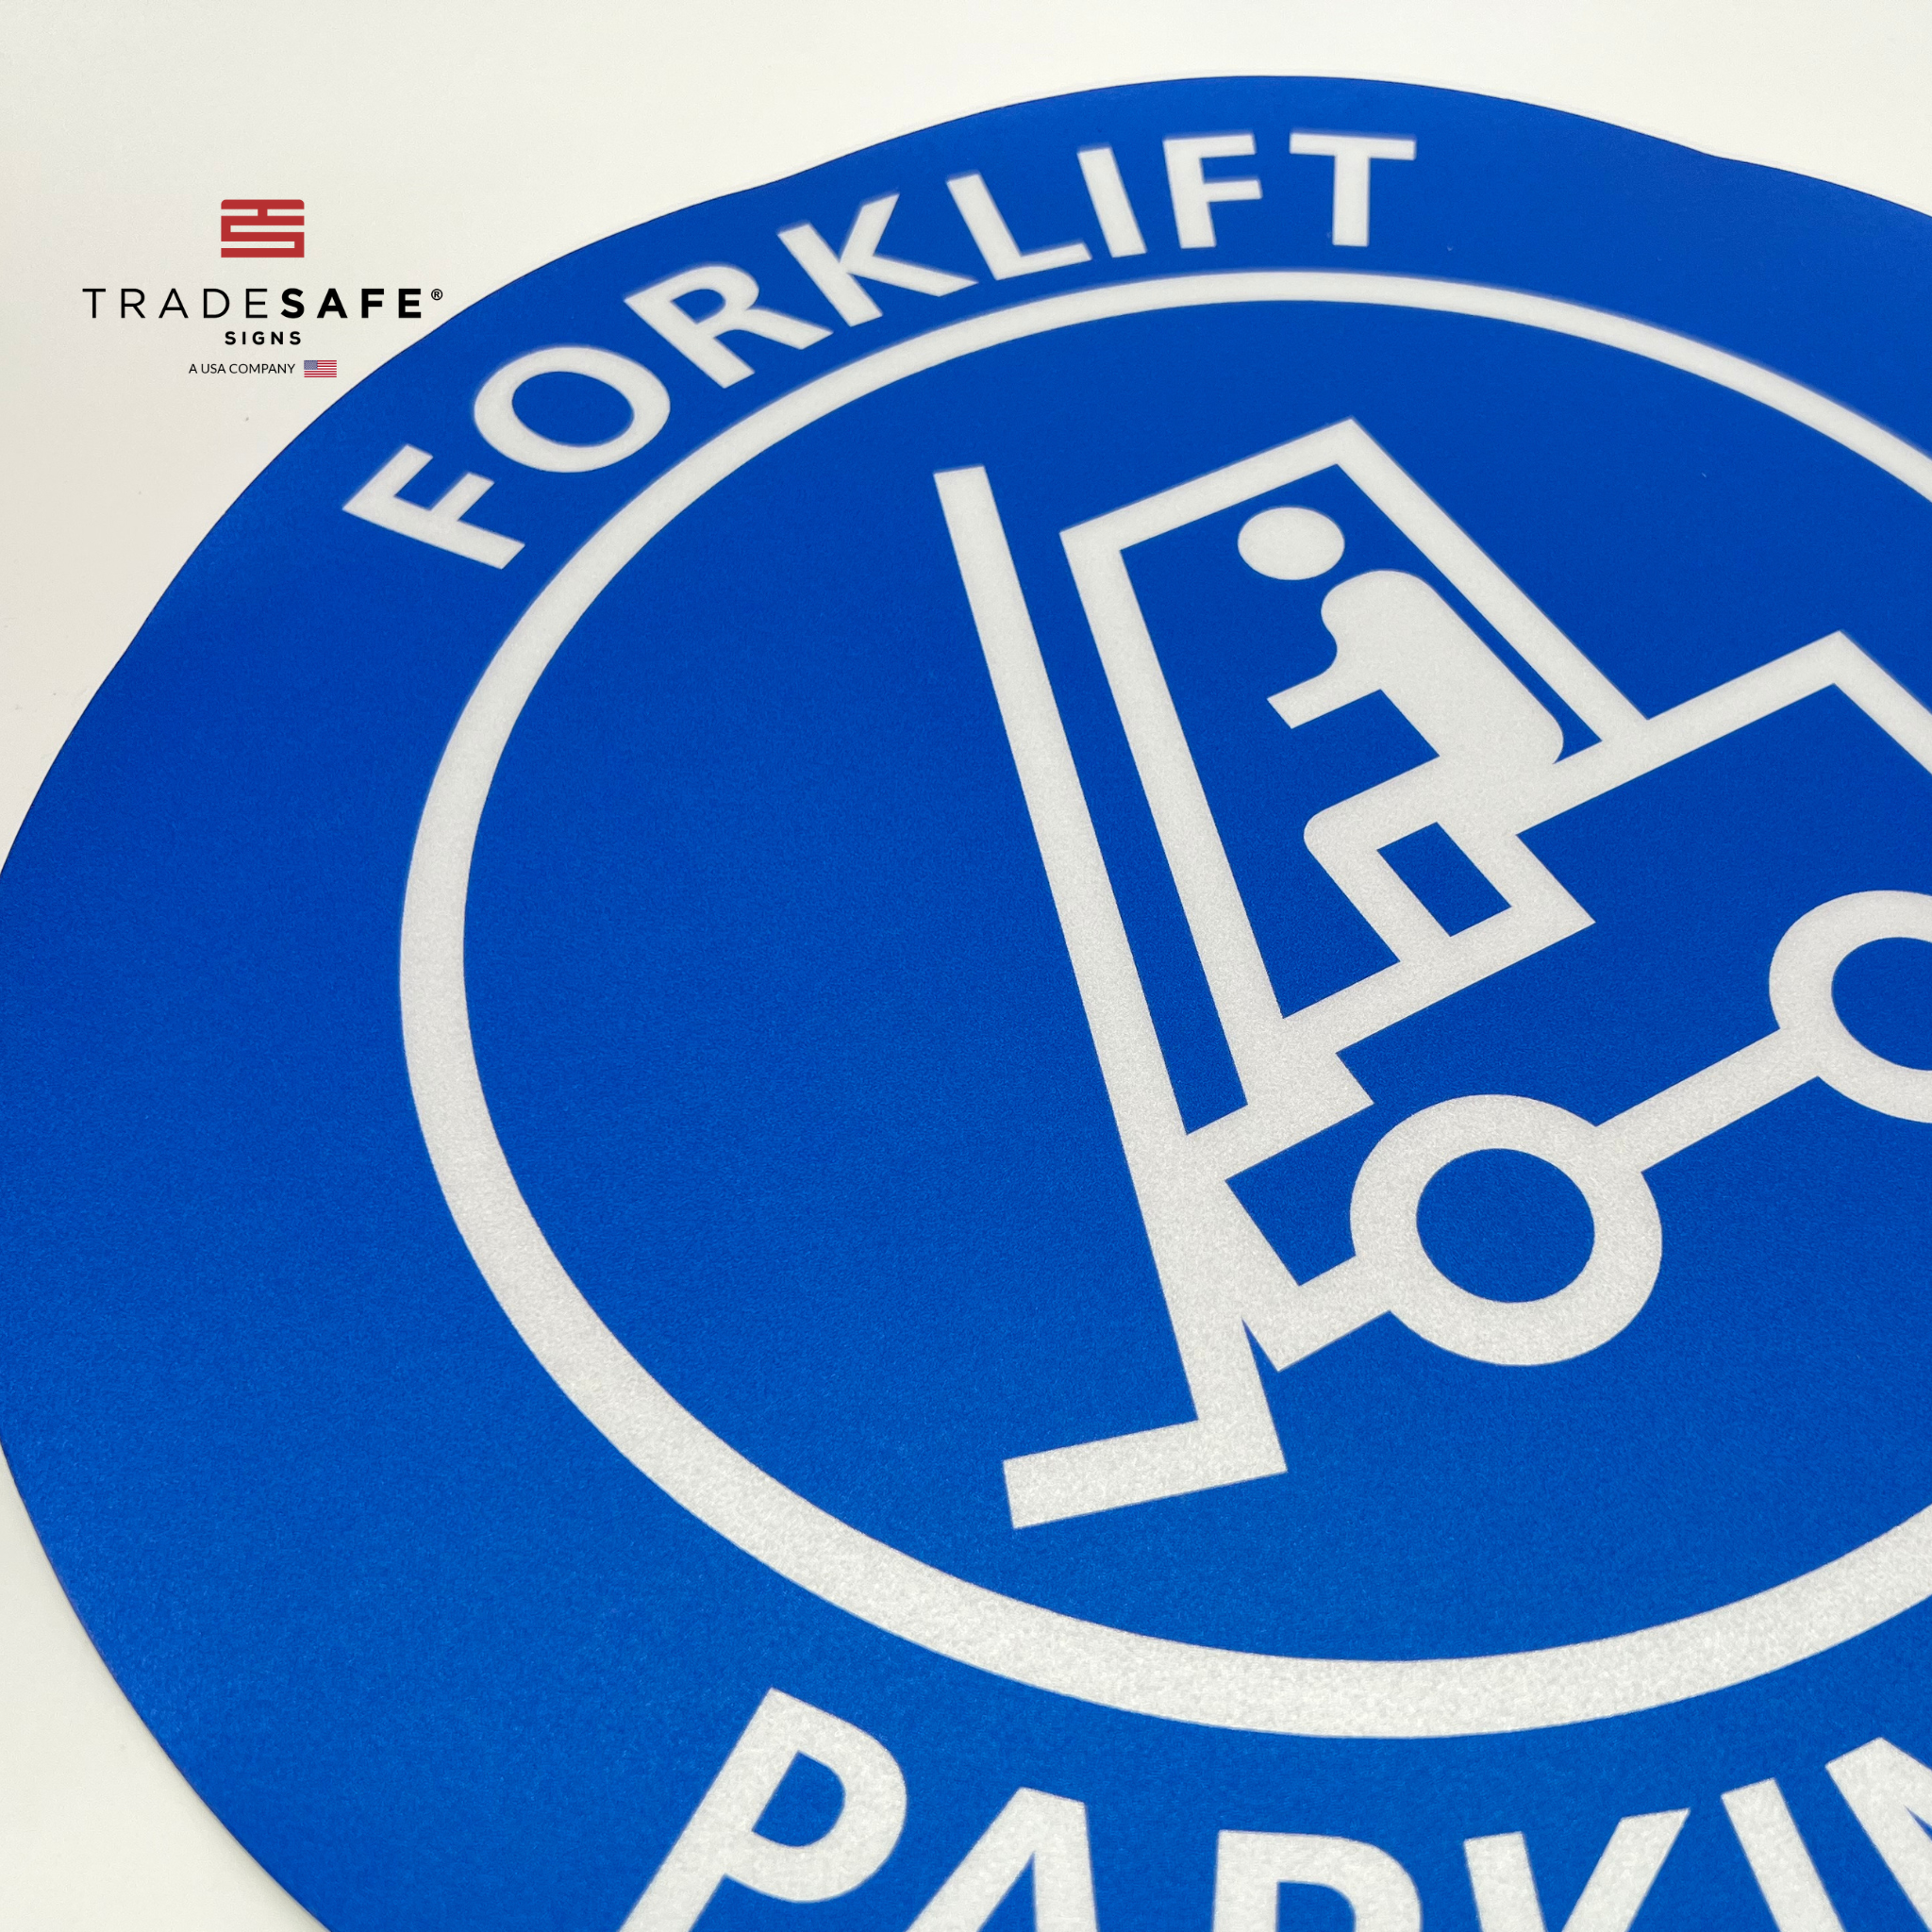 Gabelstapler Parkplatz (Forklift Parking) Rectangular German - Floor Sign